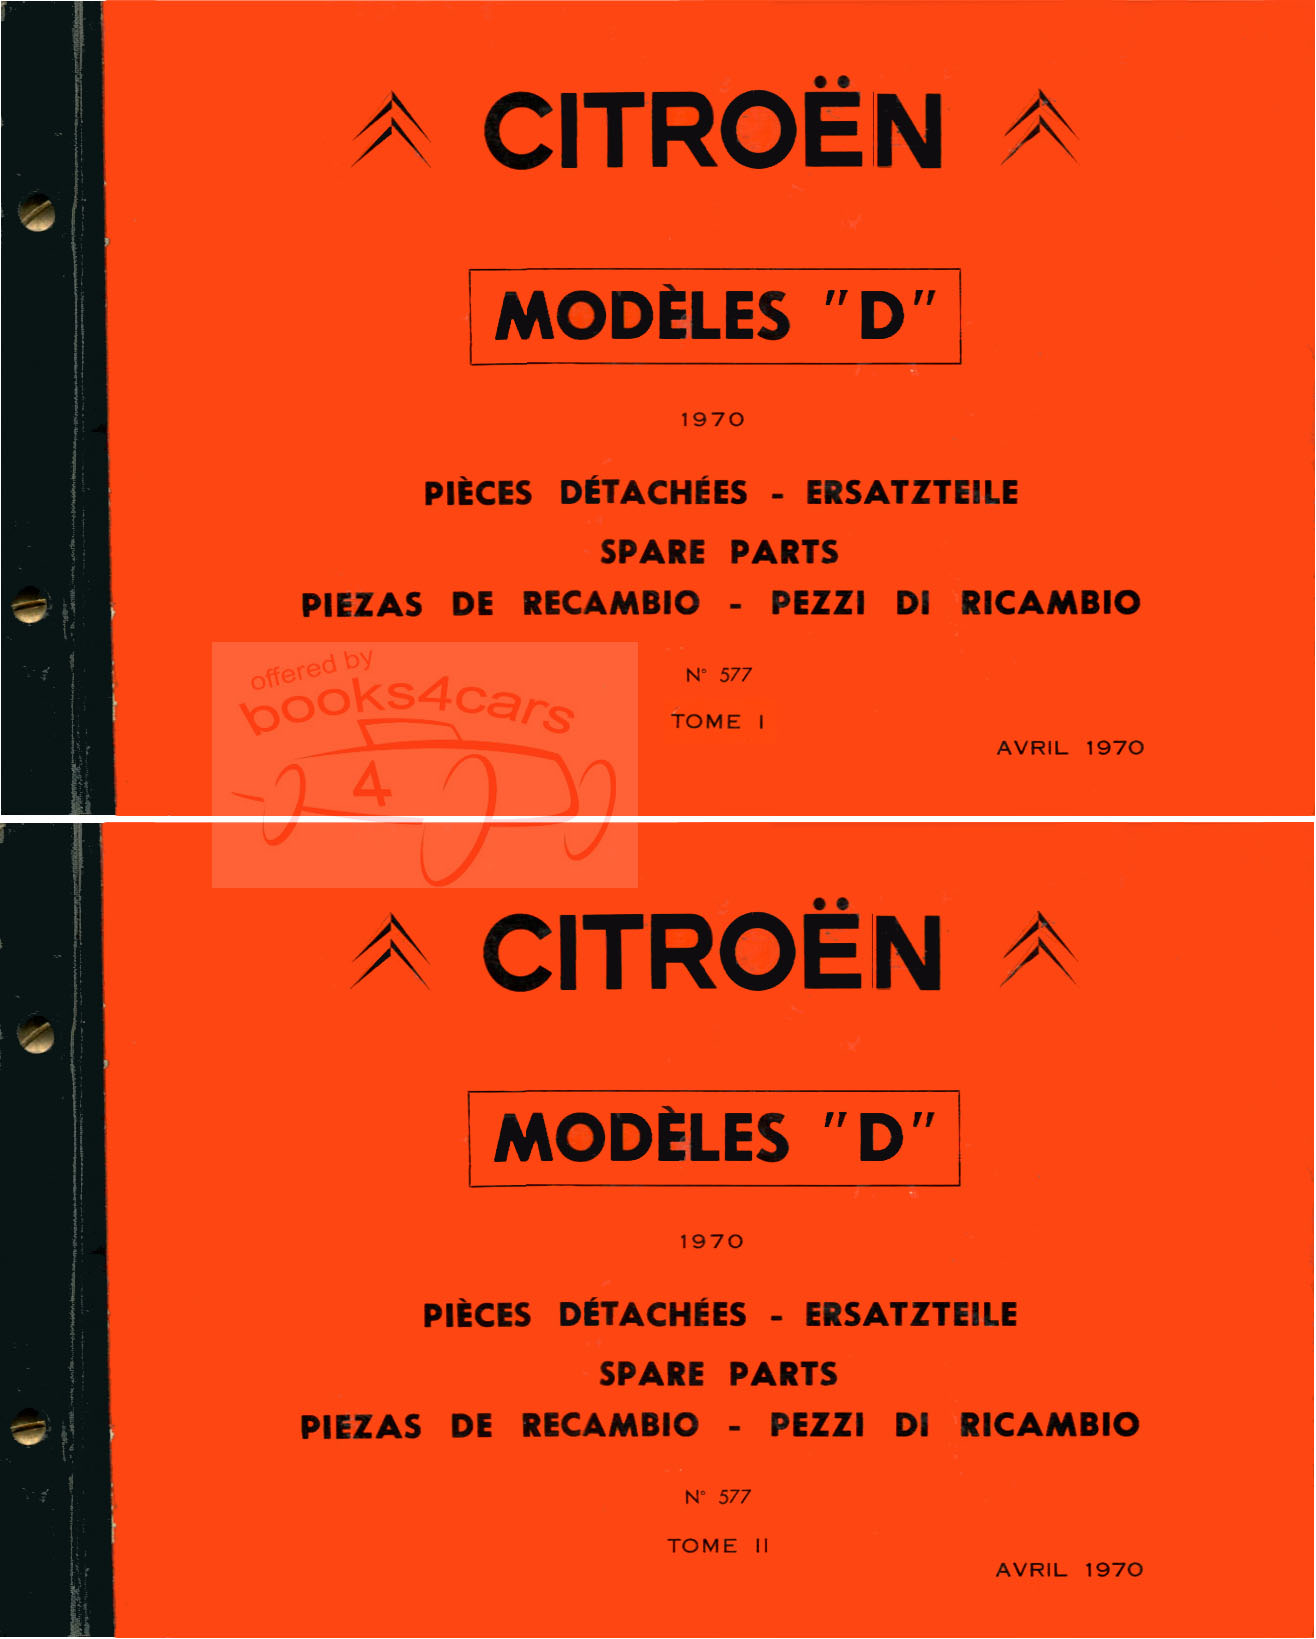 70-71 Parts Manual for D Series by Citroen DS DS21 Sedan Berline Station wagon Break Cabriolet